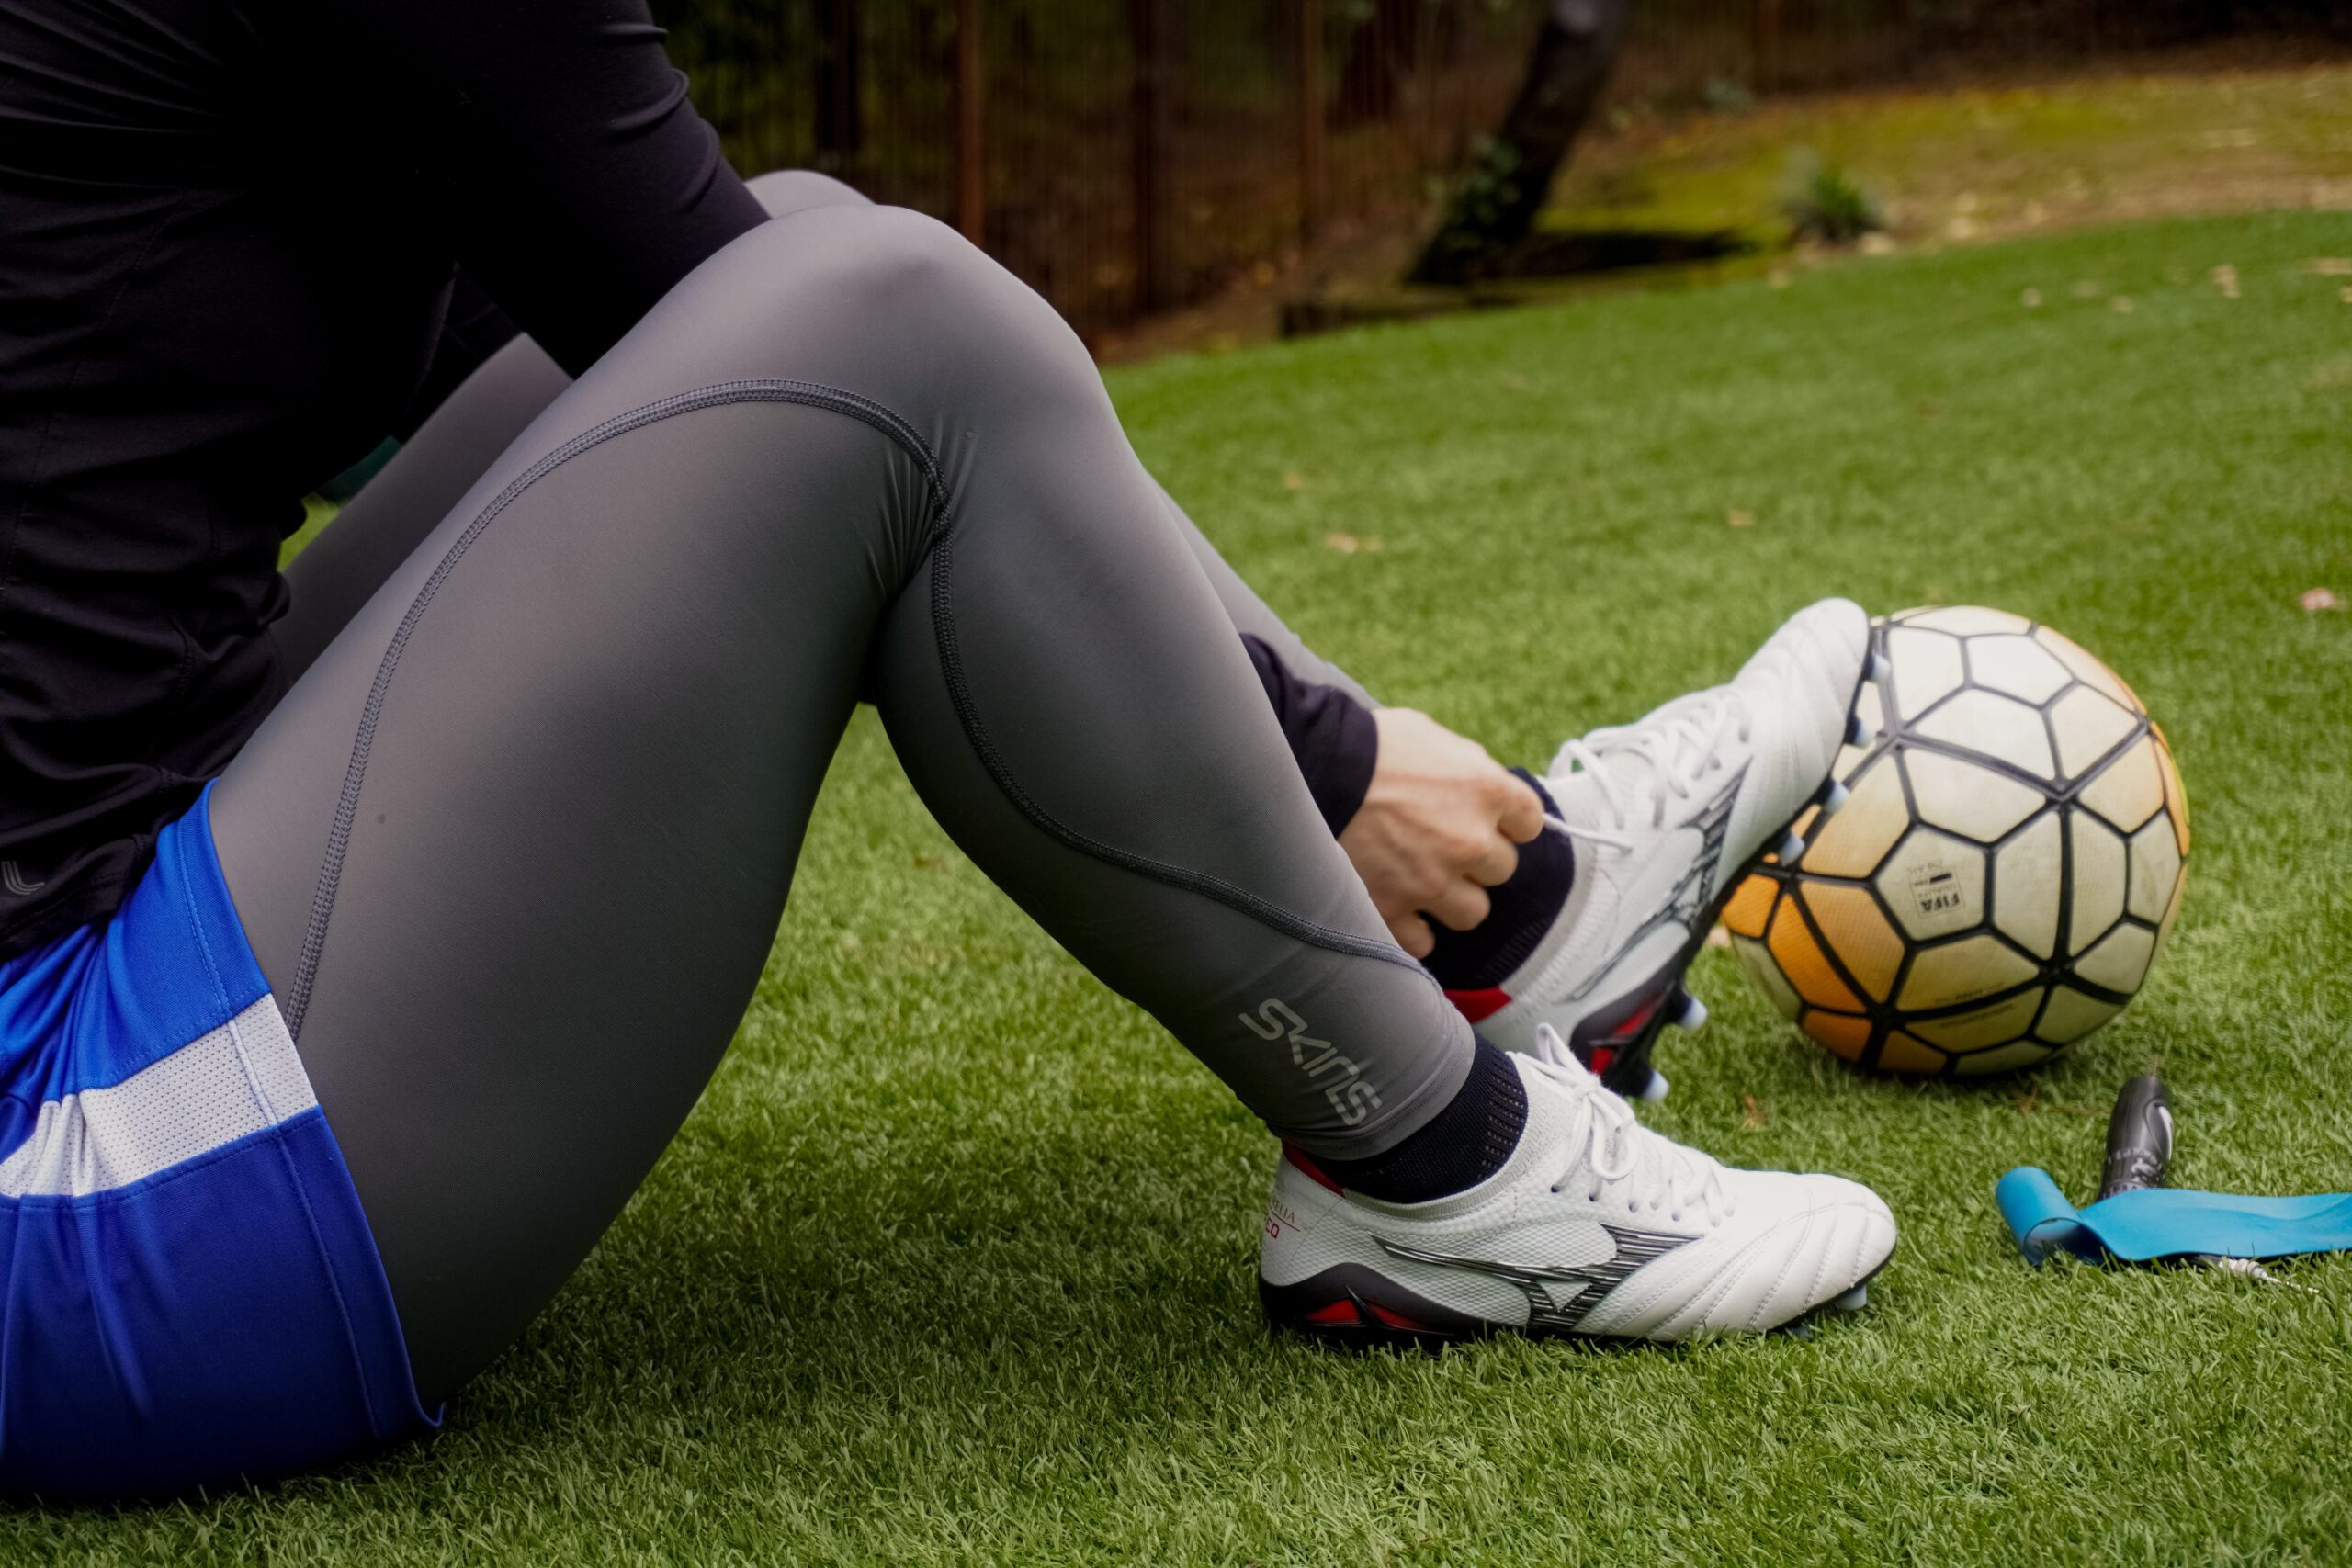  Soccer Football Players Women's Yoga Pants High